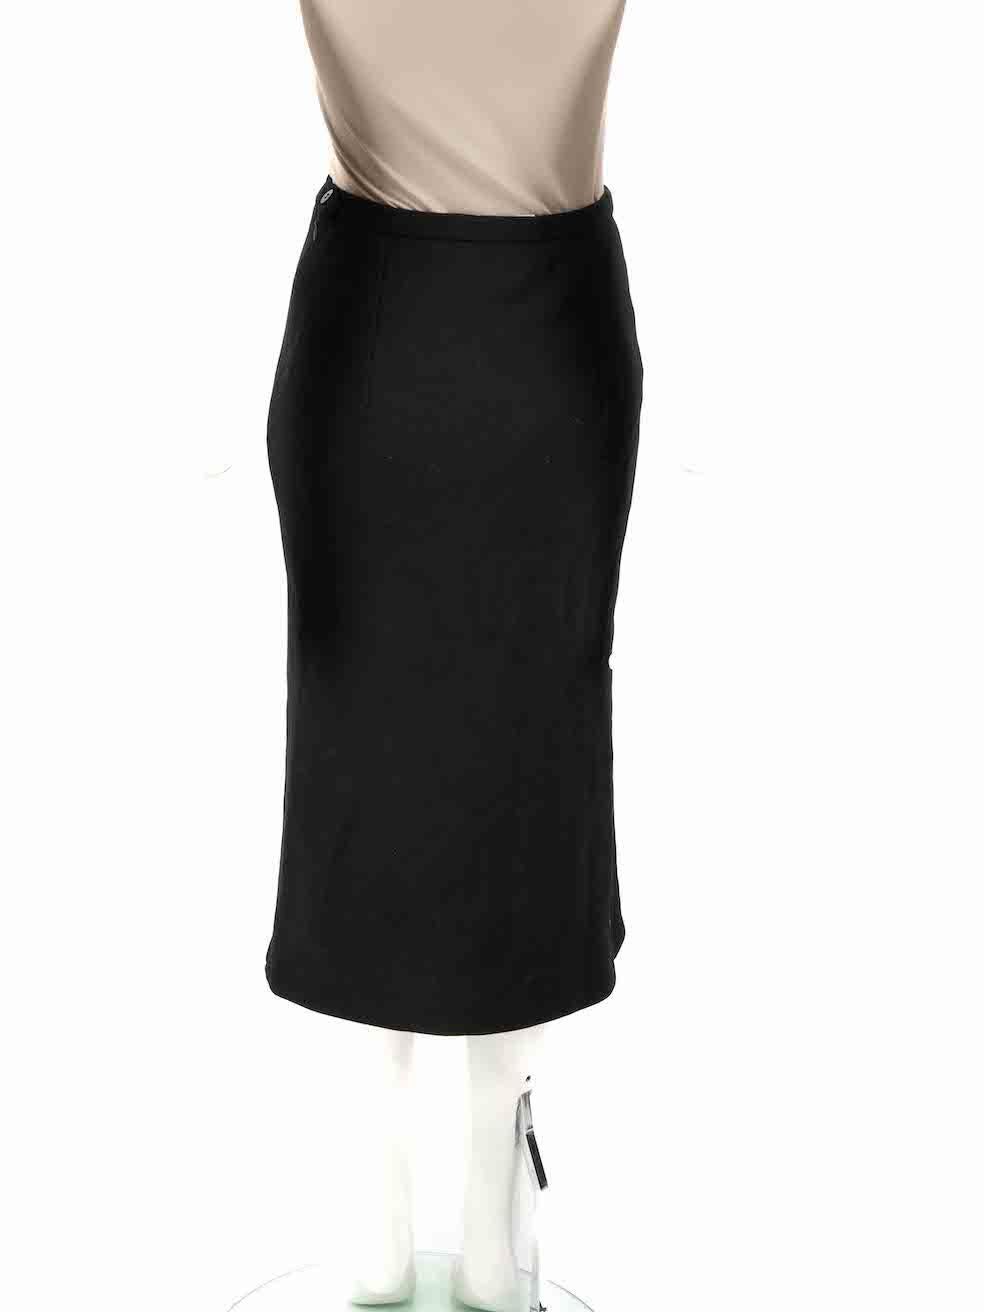 Max Mara Black Midi Pencil Skirt Size S In Excellent Condition For Sale In London, GB